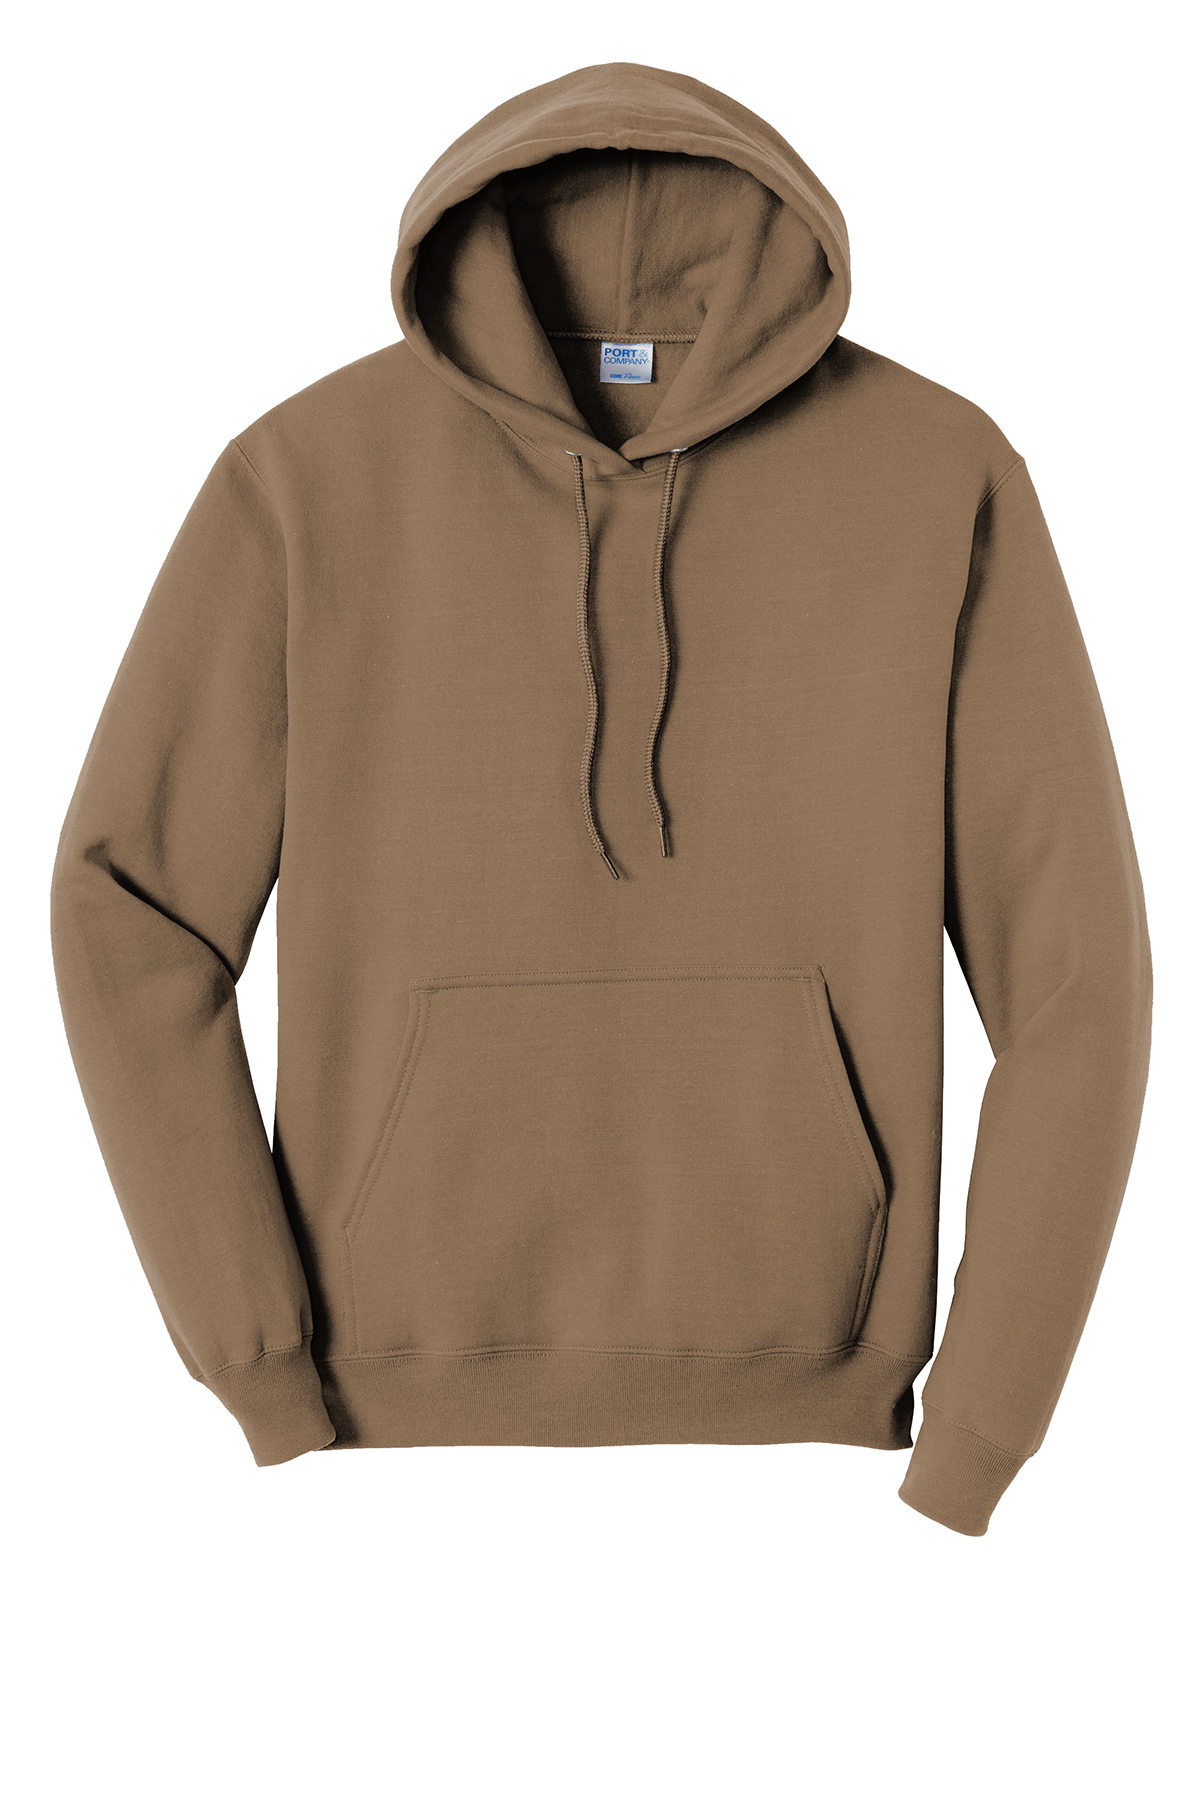 Hooded Company | & Sweatshirt Pullover Port | Company Core Product Port & Fleece